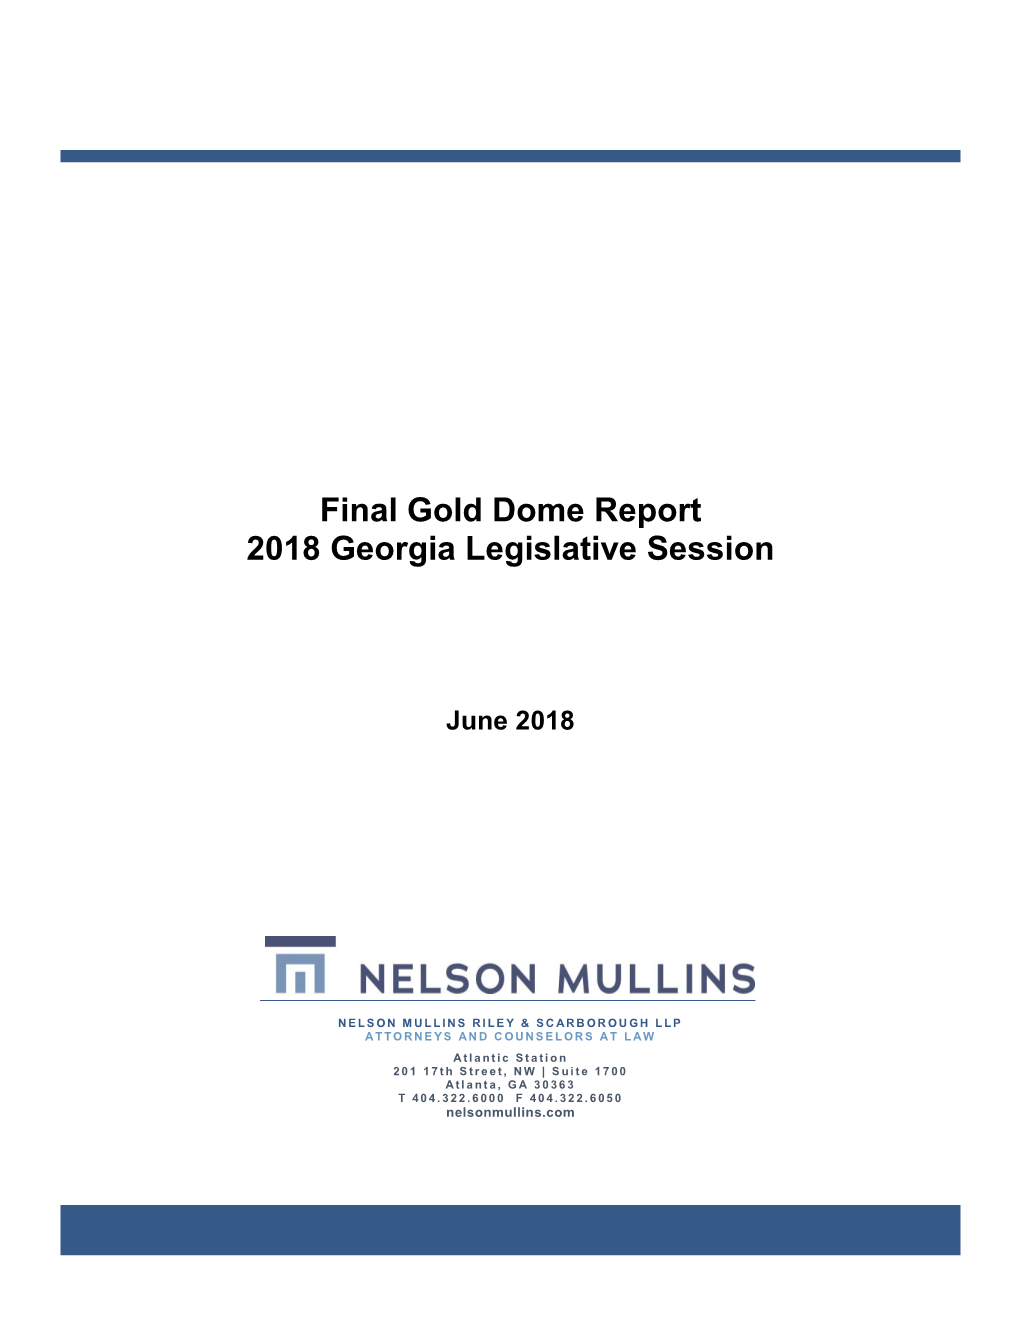 Final Gold Dome Report 2018 Georgia Legislative Session